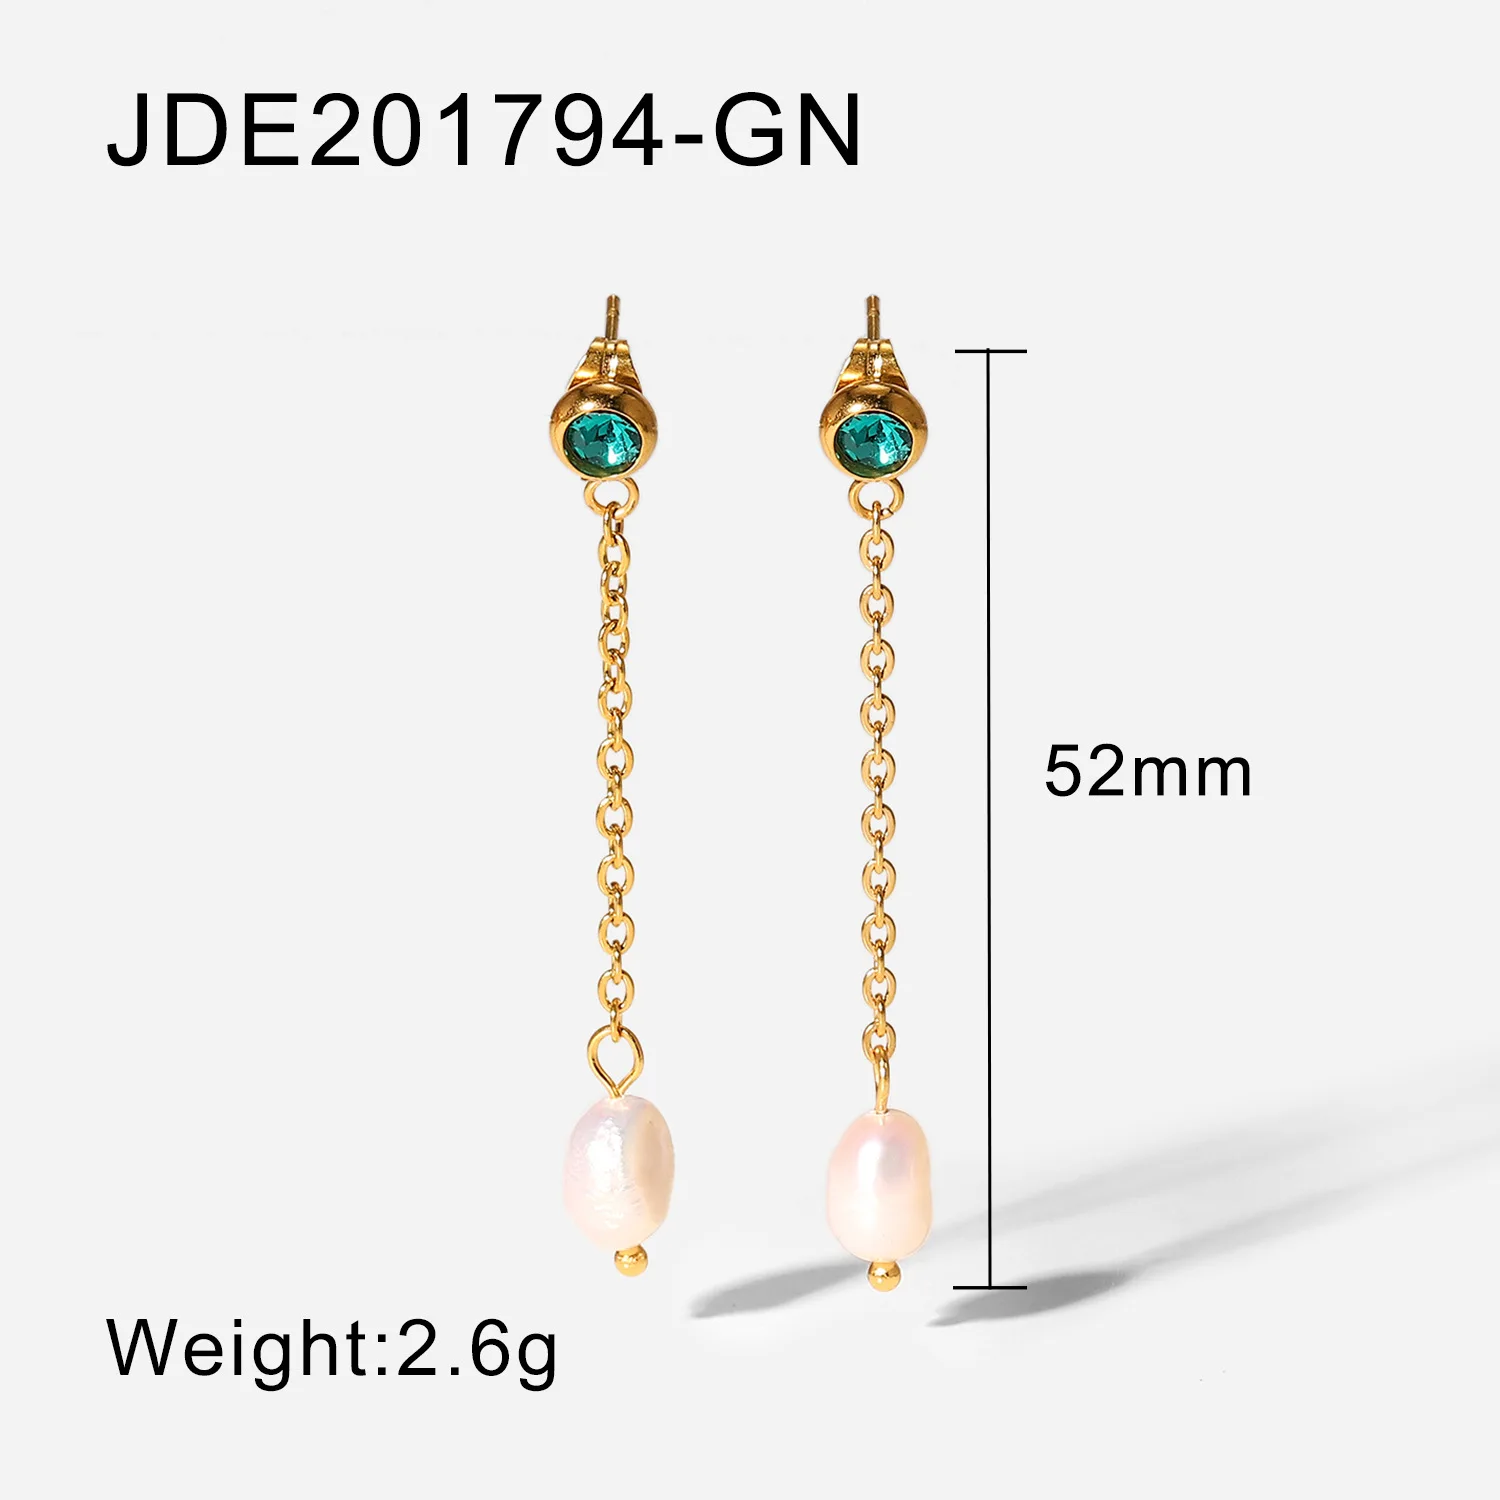 JDE201794-GN size